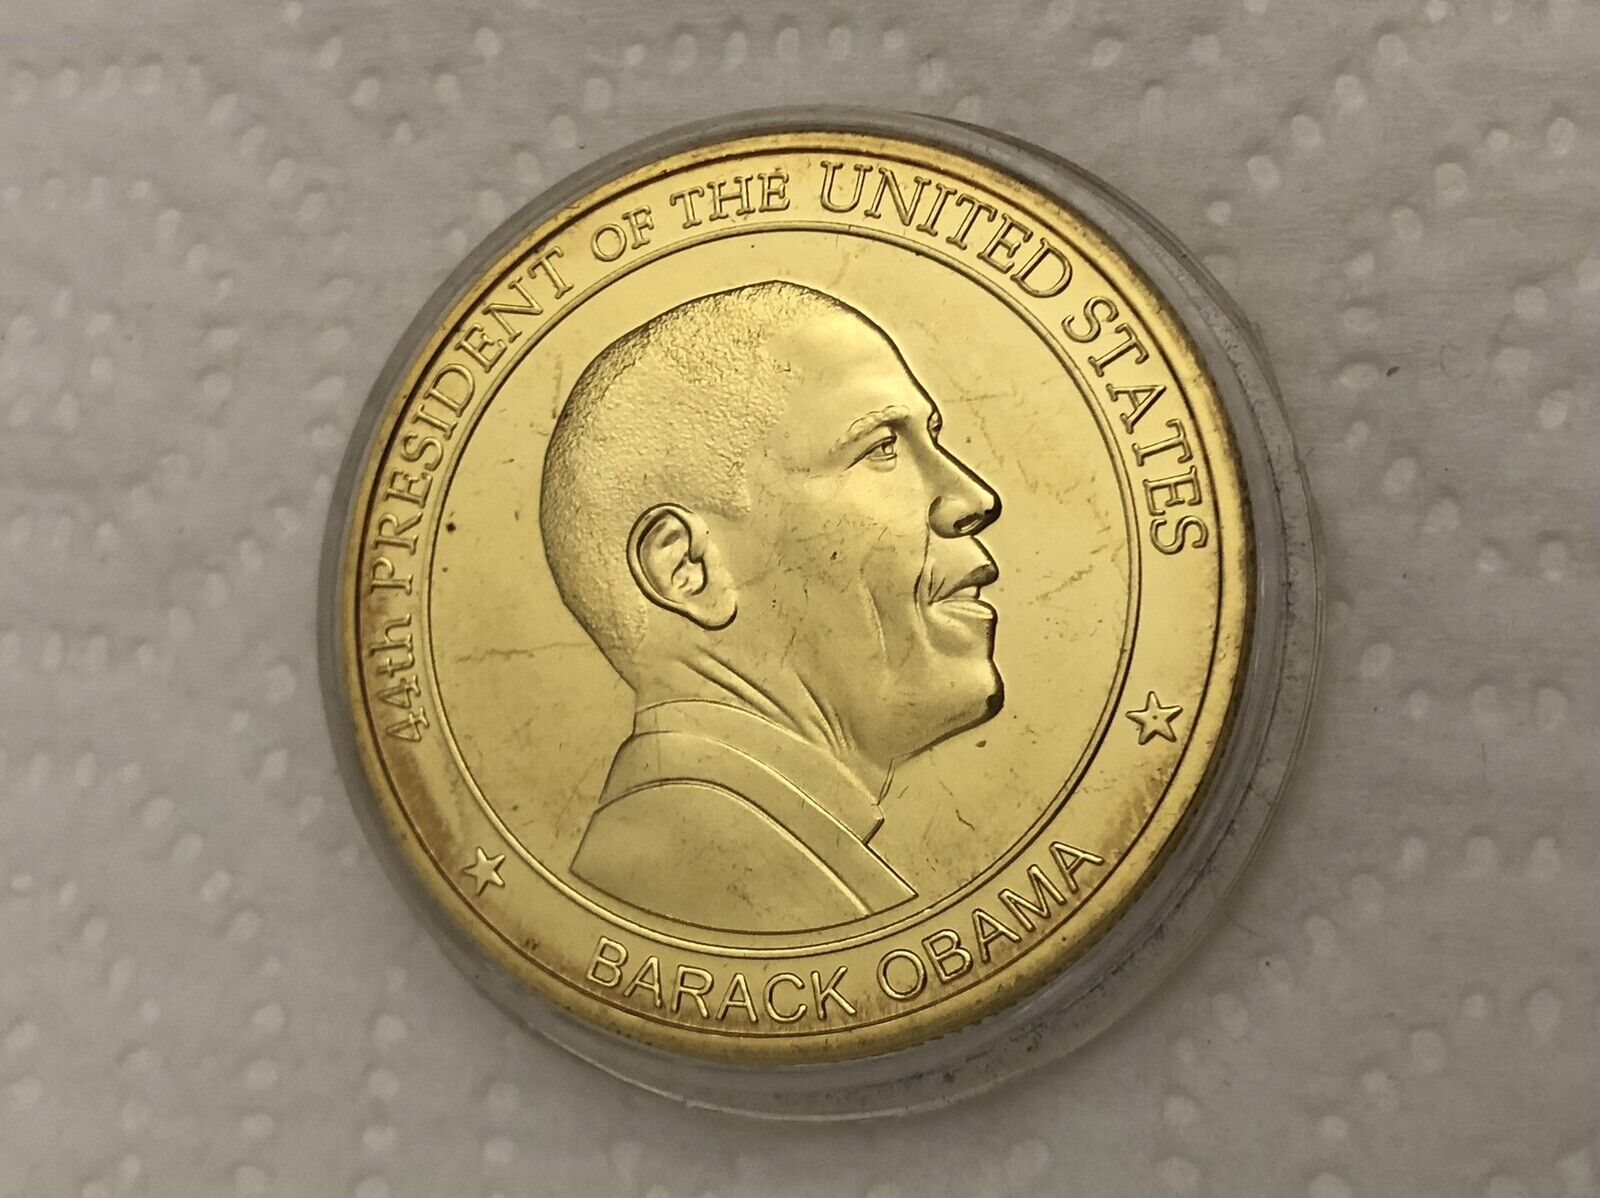 Barack Obama Commemorative Coin